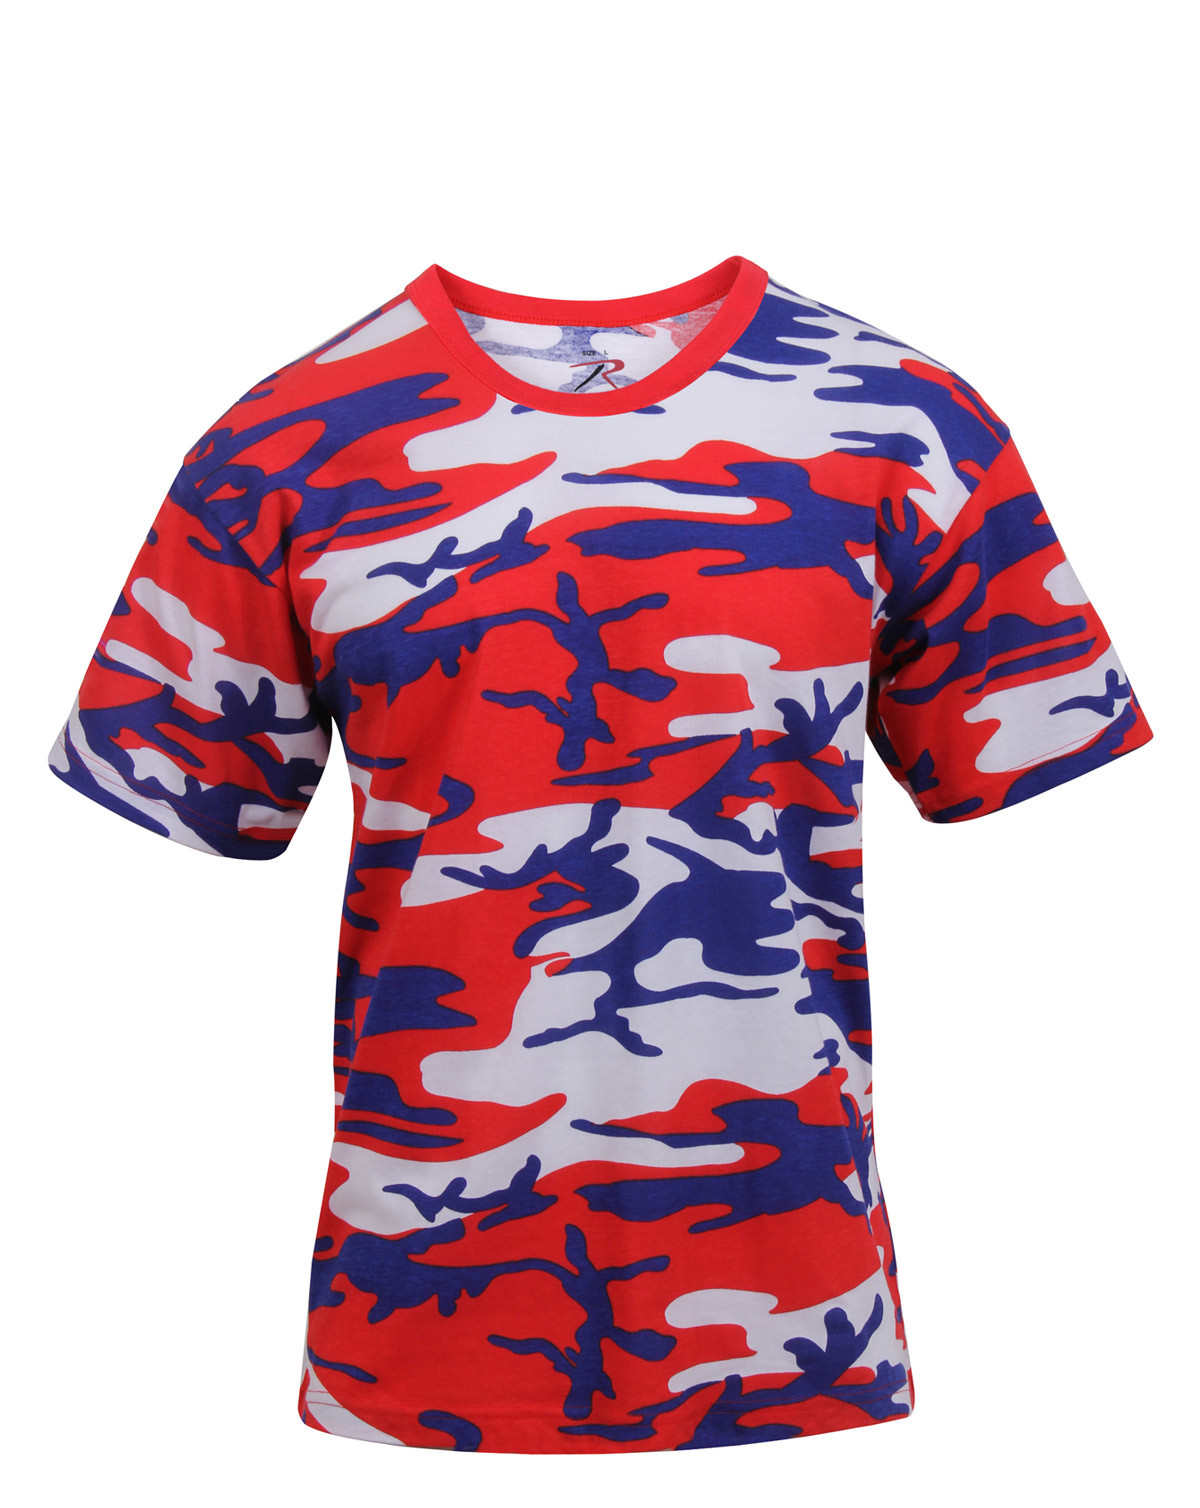 Rothco T-shirt - Mange Camouflager (Rød / Hvid / Blå Camo, M)